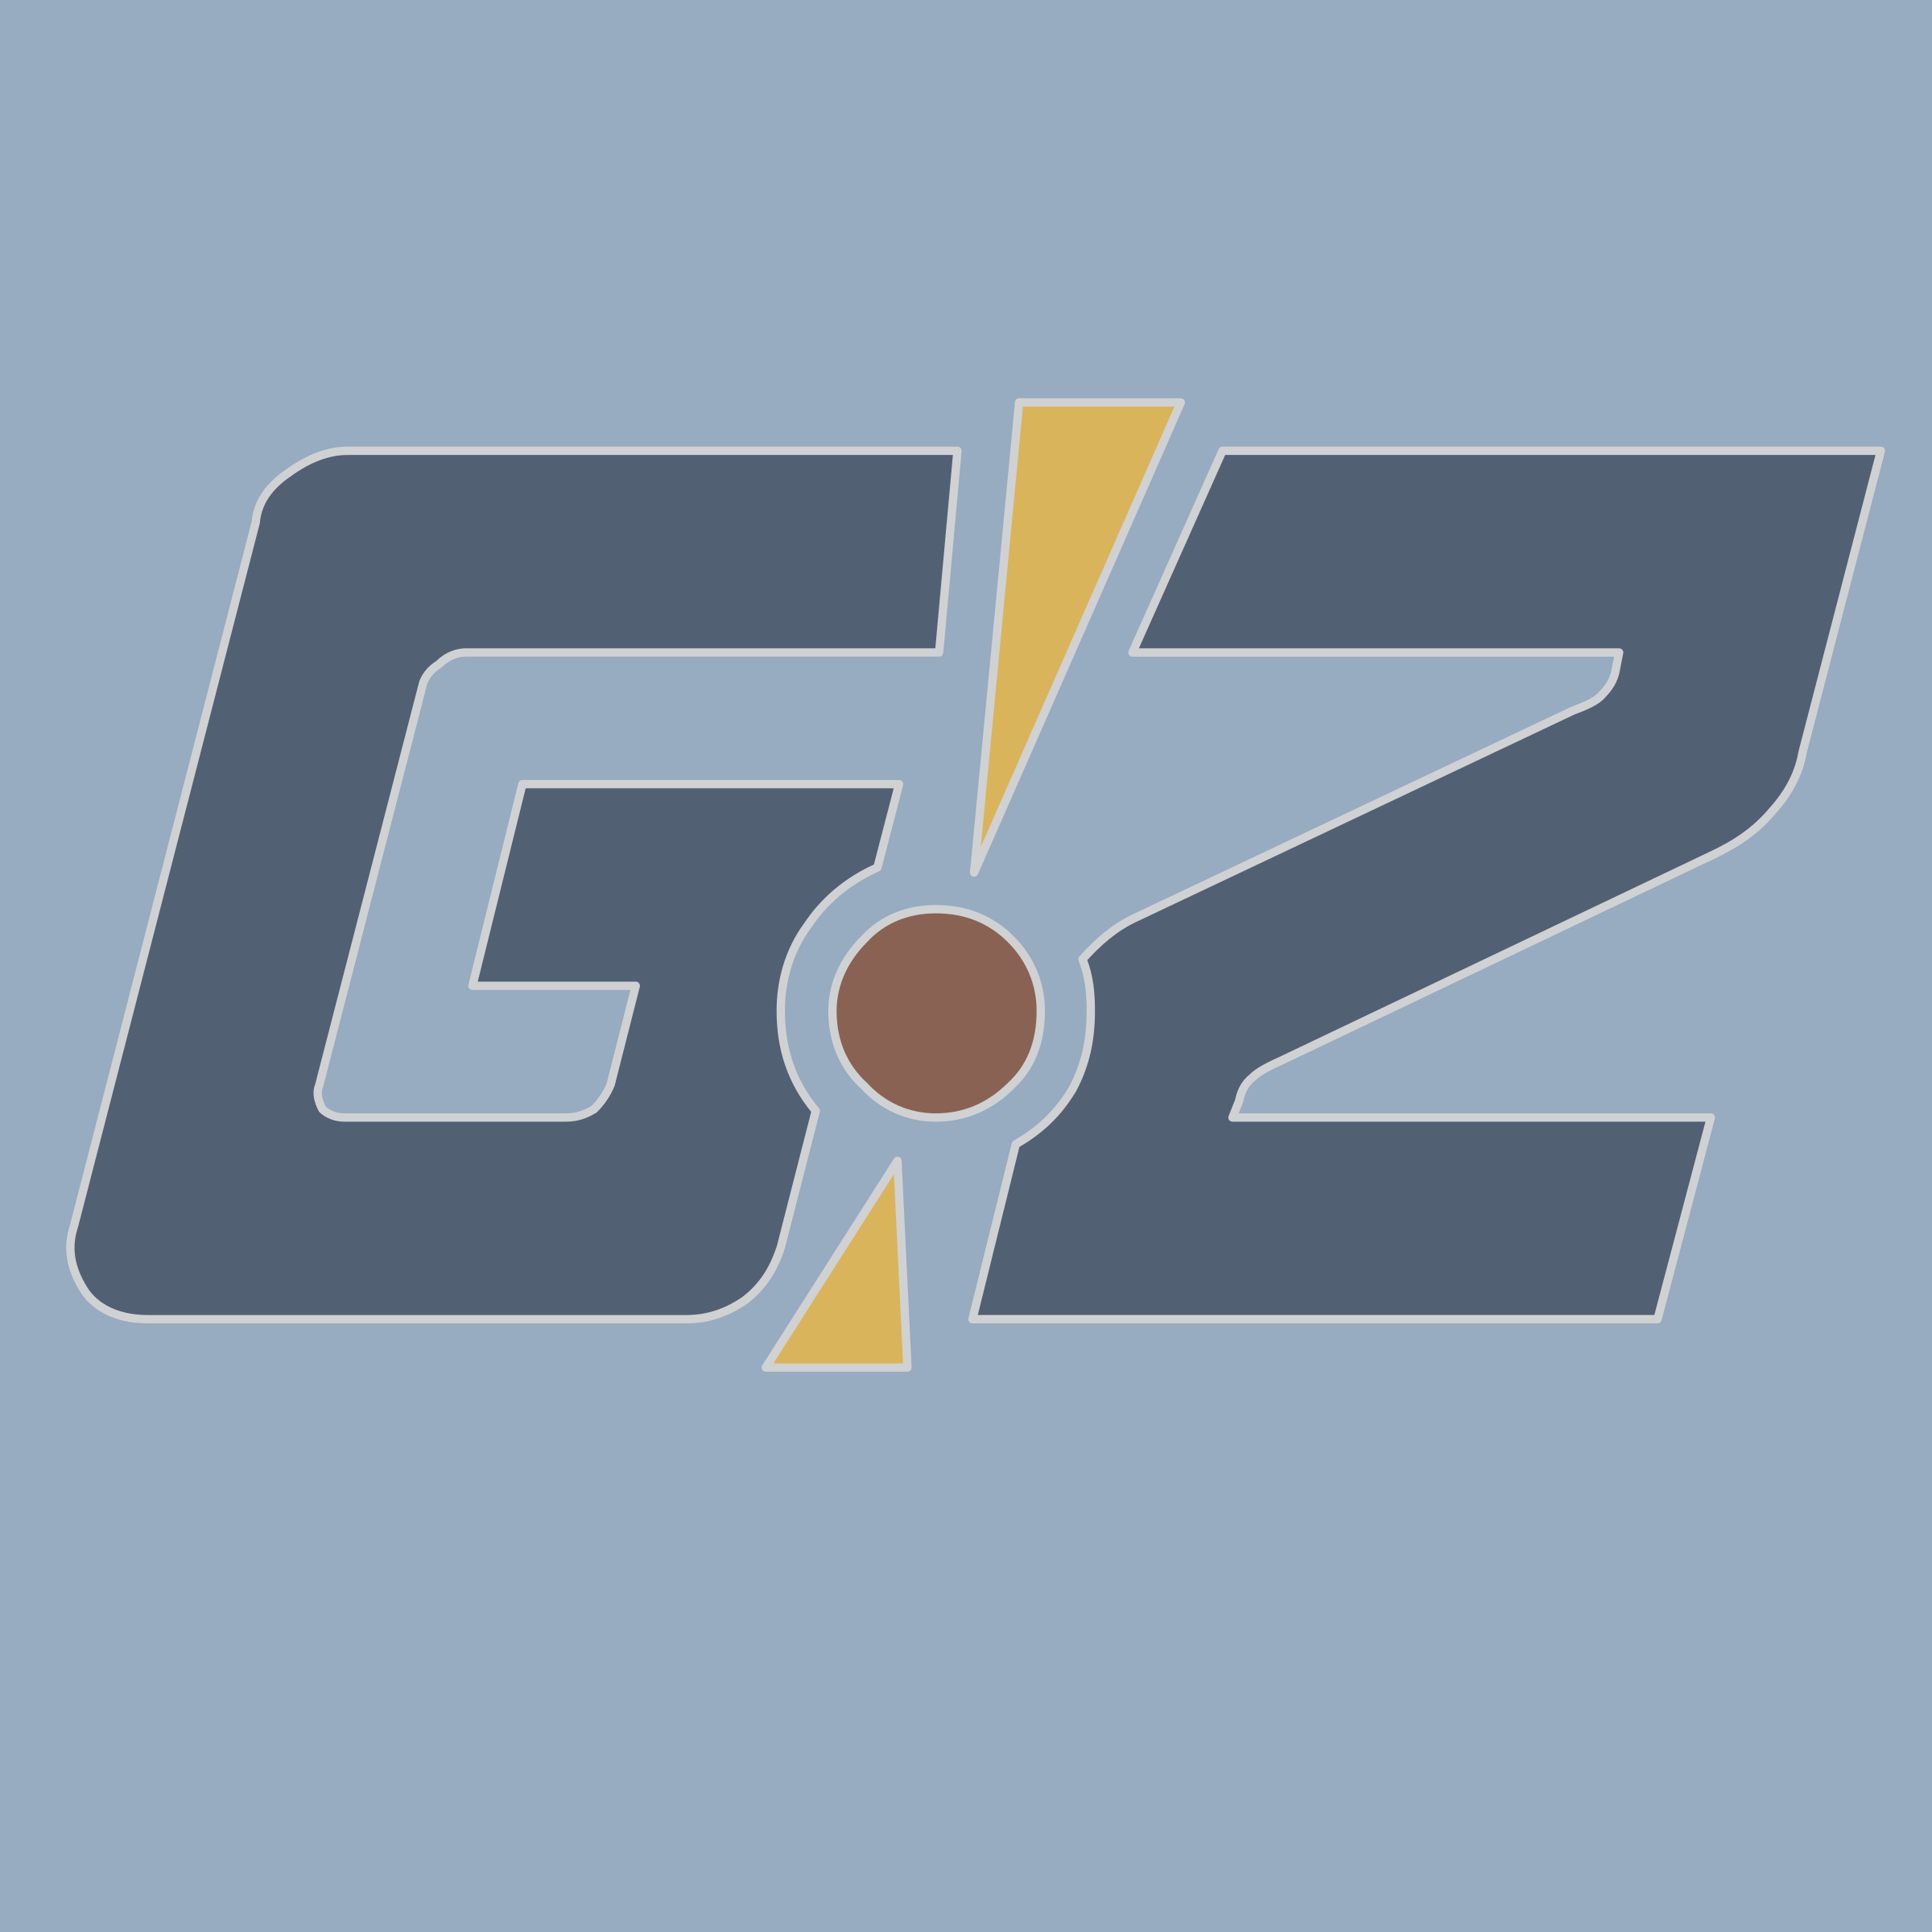 Gz Logo - GZ GroundZero Logo PNG Transparent & SVG Vector - Freebie Supply